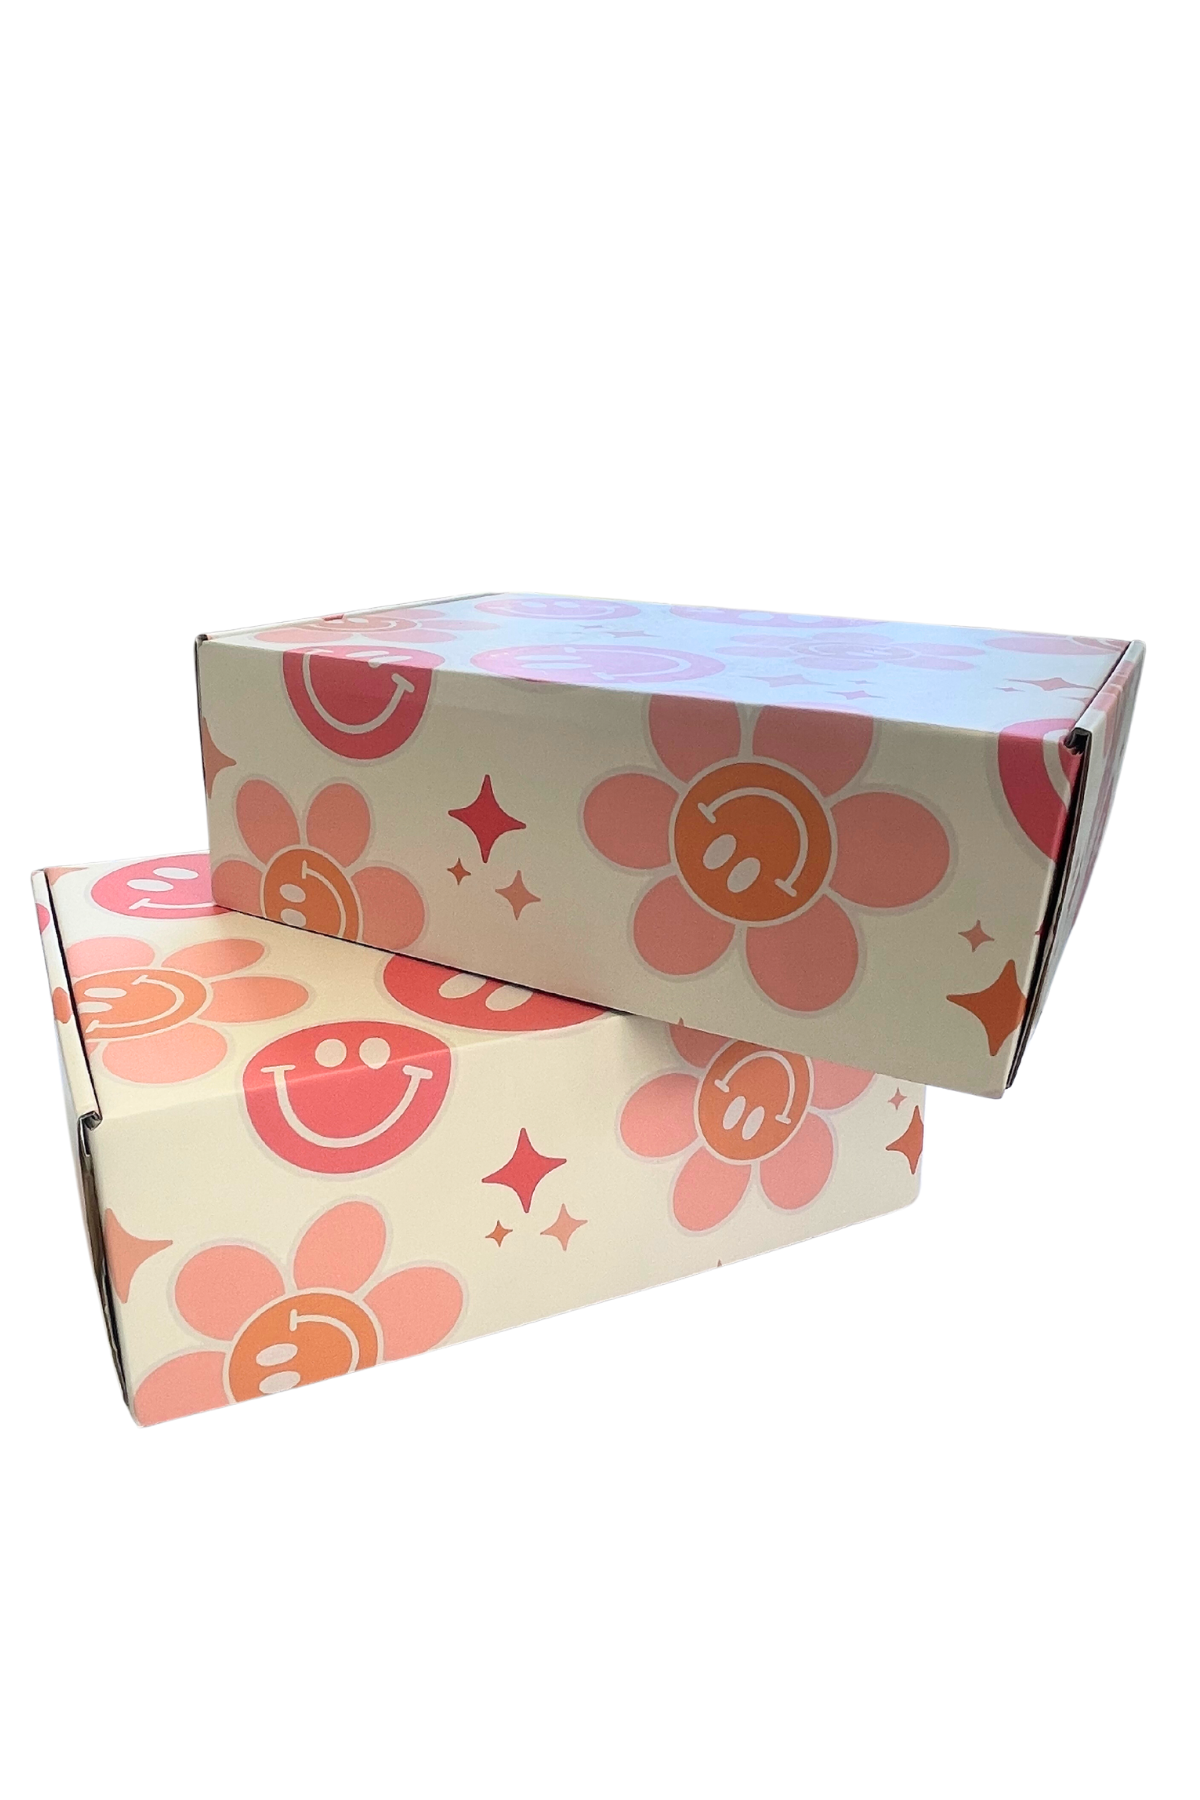 Summer Smiles Shipping Box